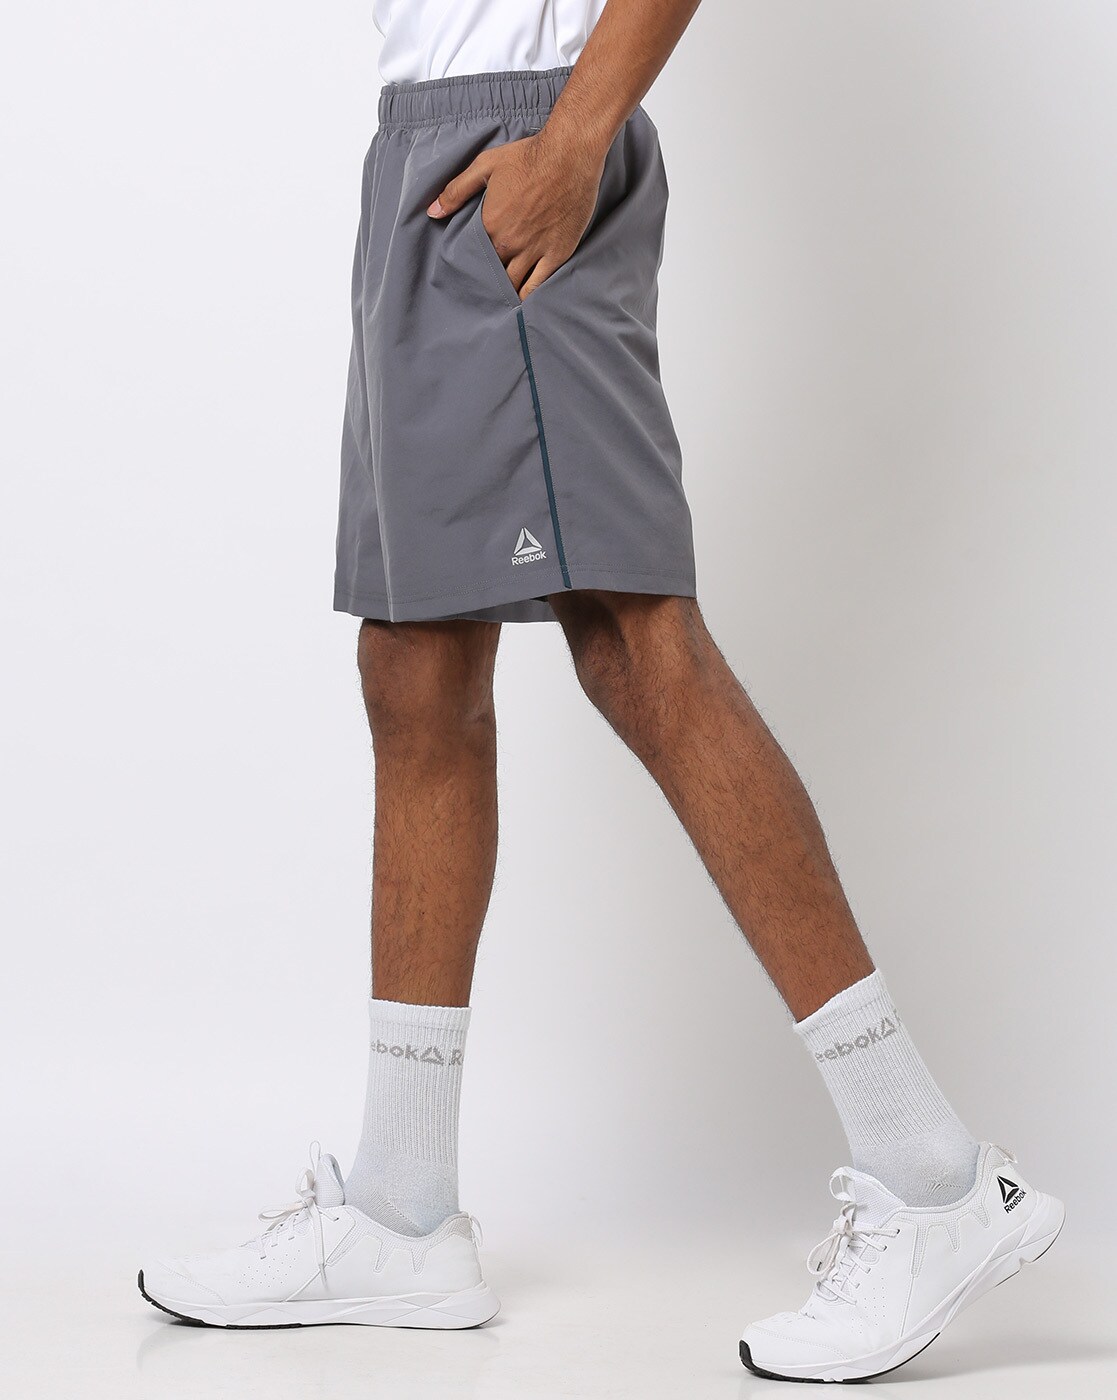 reebok grey shorts